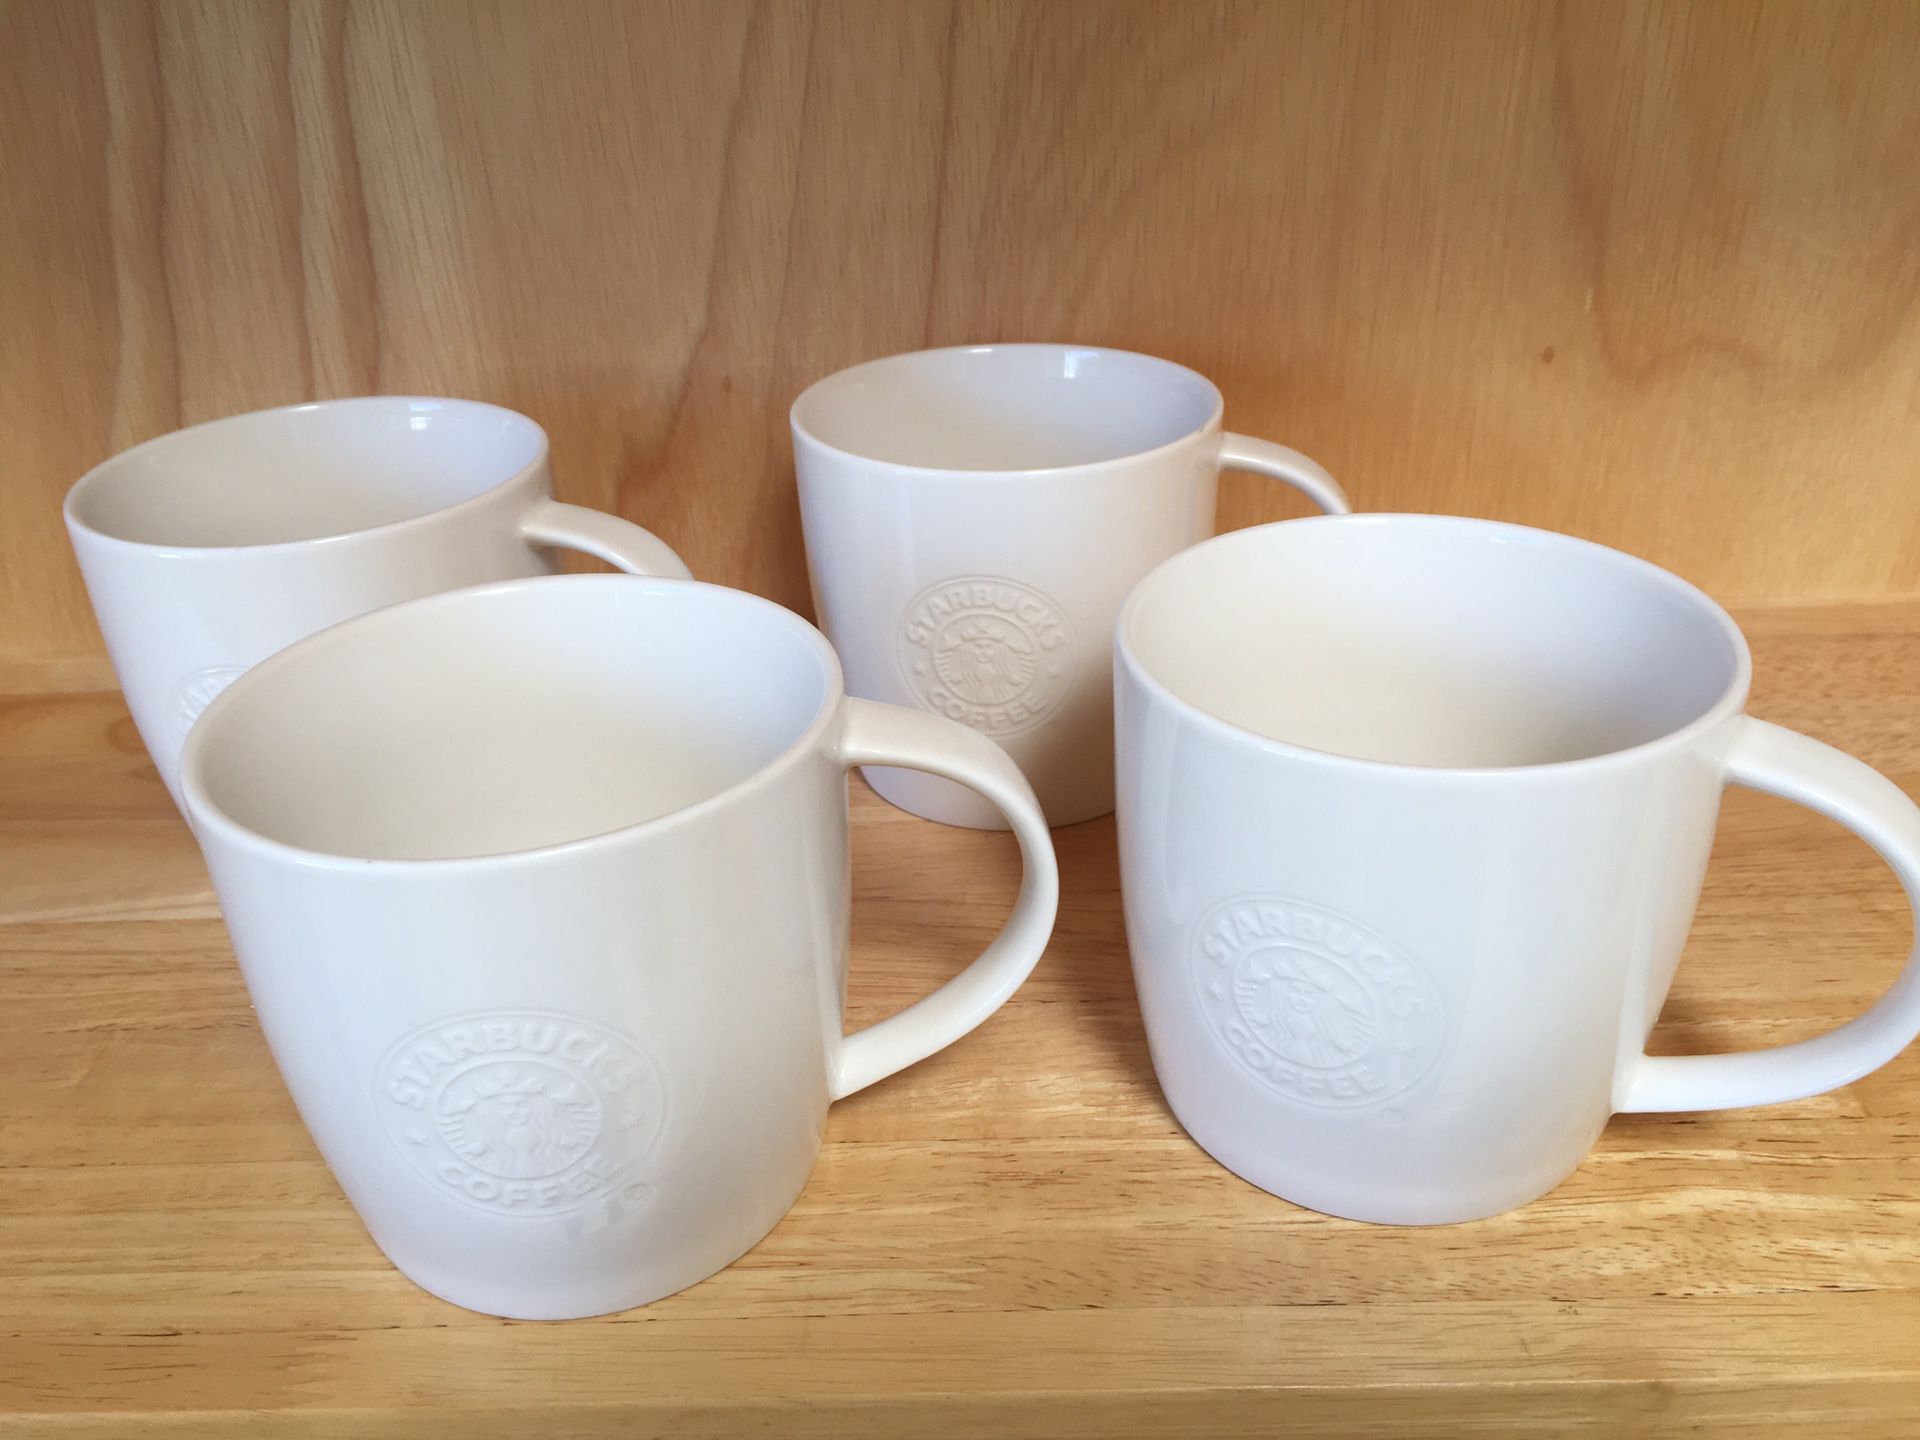 Set of Starbucks 14-Oz Mugs